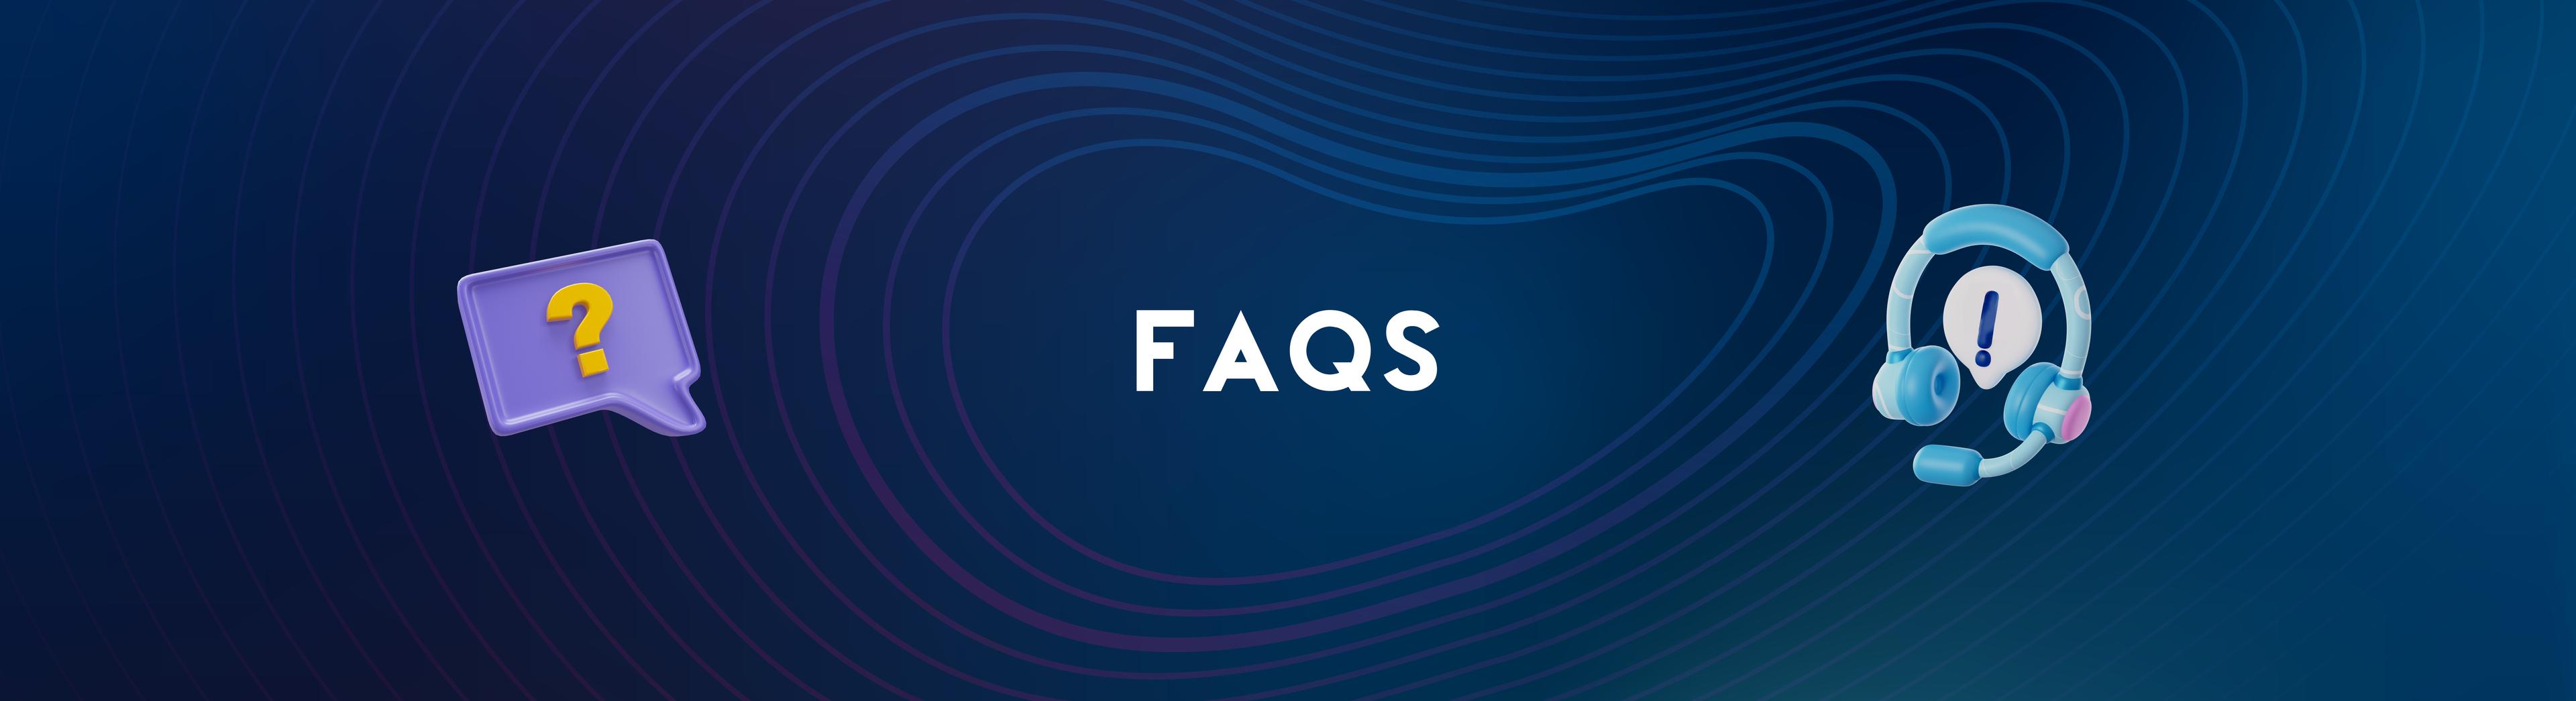 FAQs Banner Image